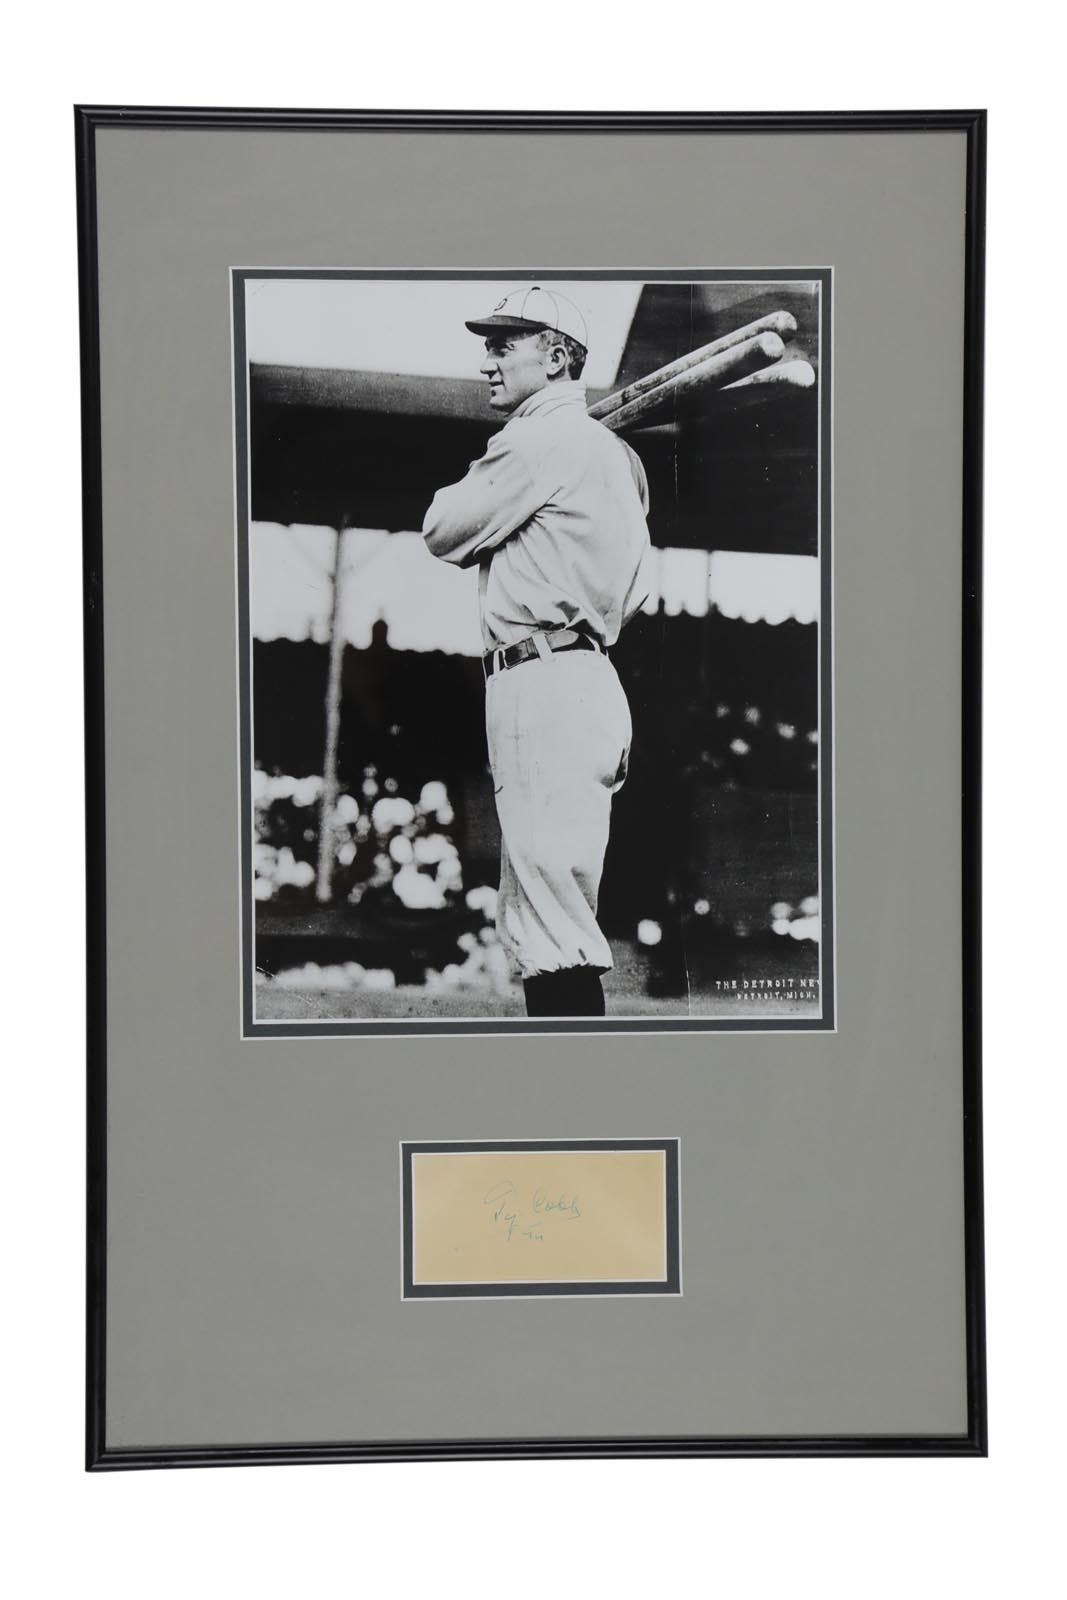 Ty Cobb and Detroit Tigers - Beautiful Ty Cobb Signature Display (JSA)